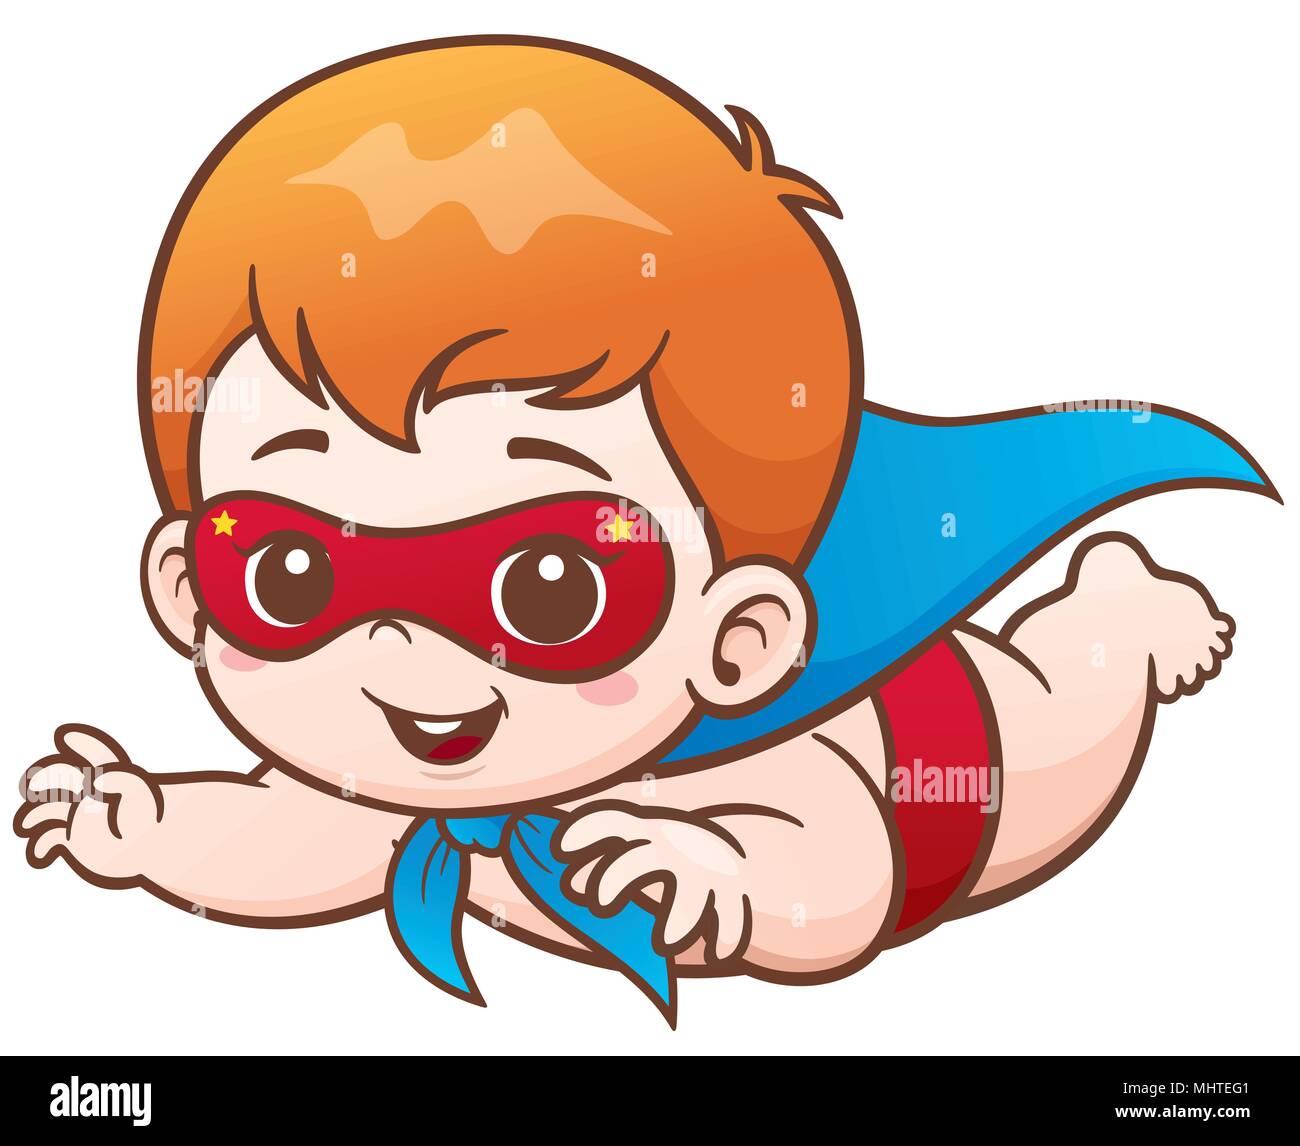 Vector Illustration of Cartoon Baby super hero cosplay character